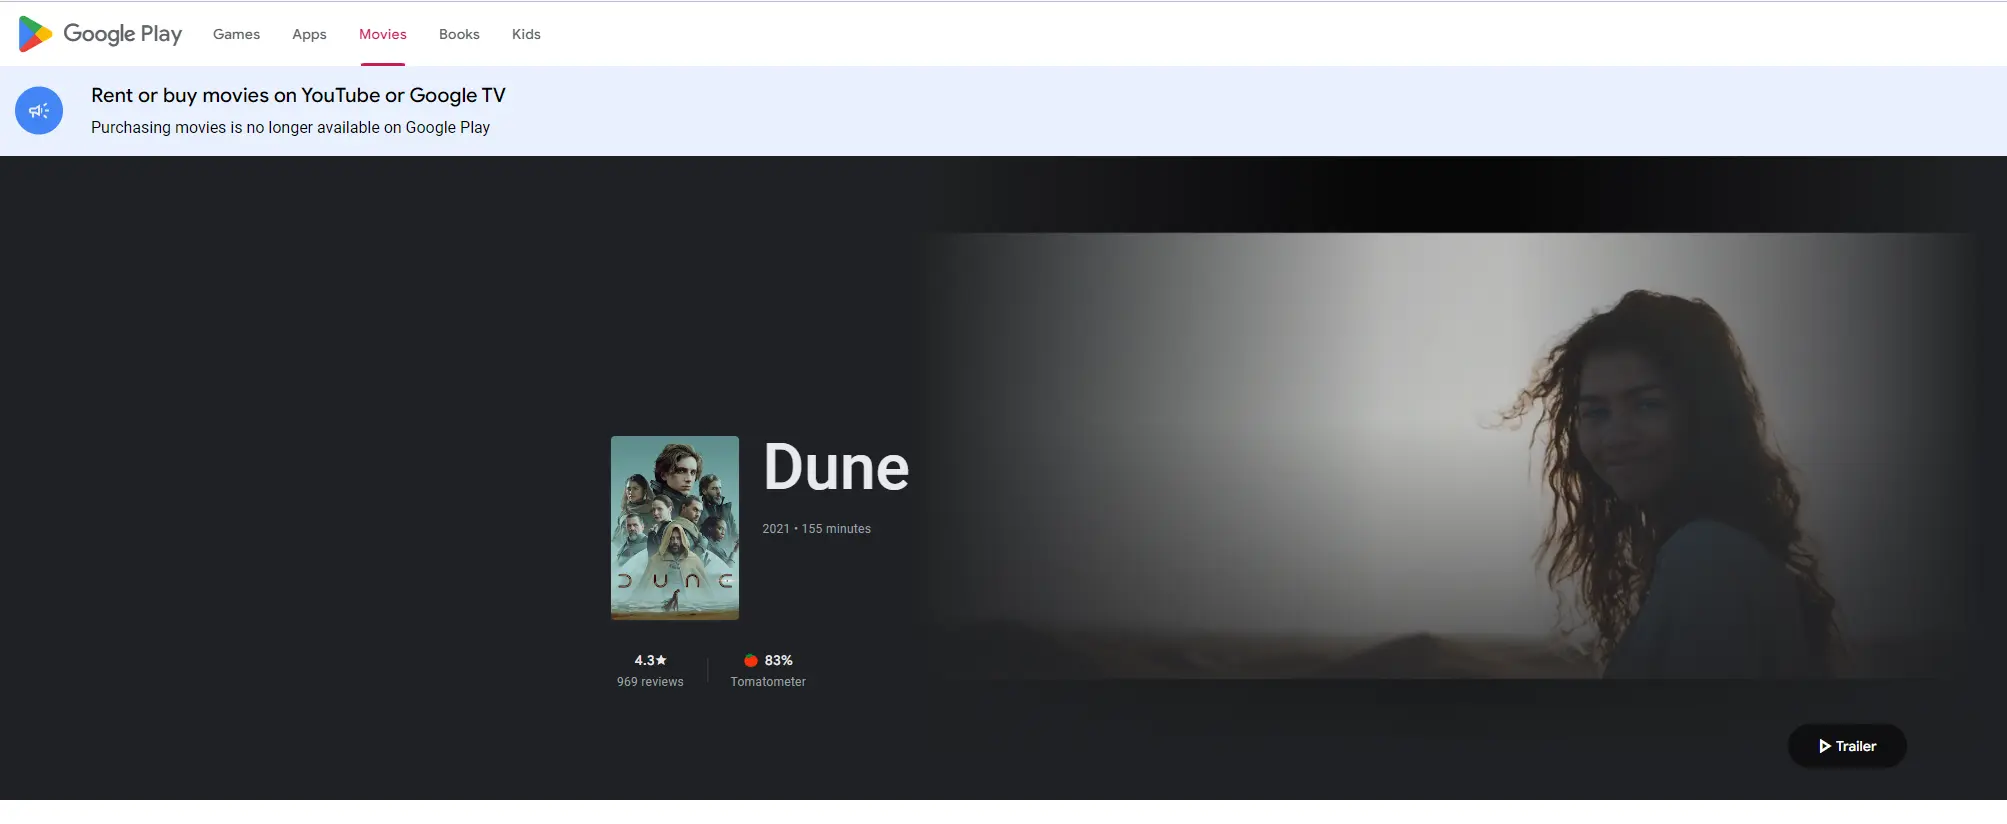 get Dune on Google Play Movies